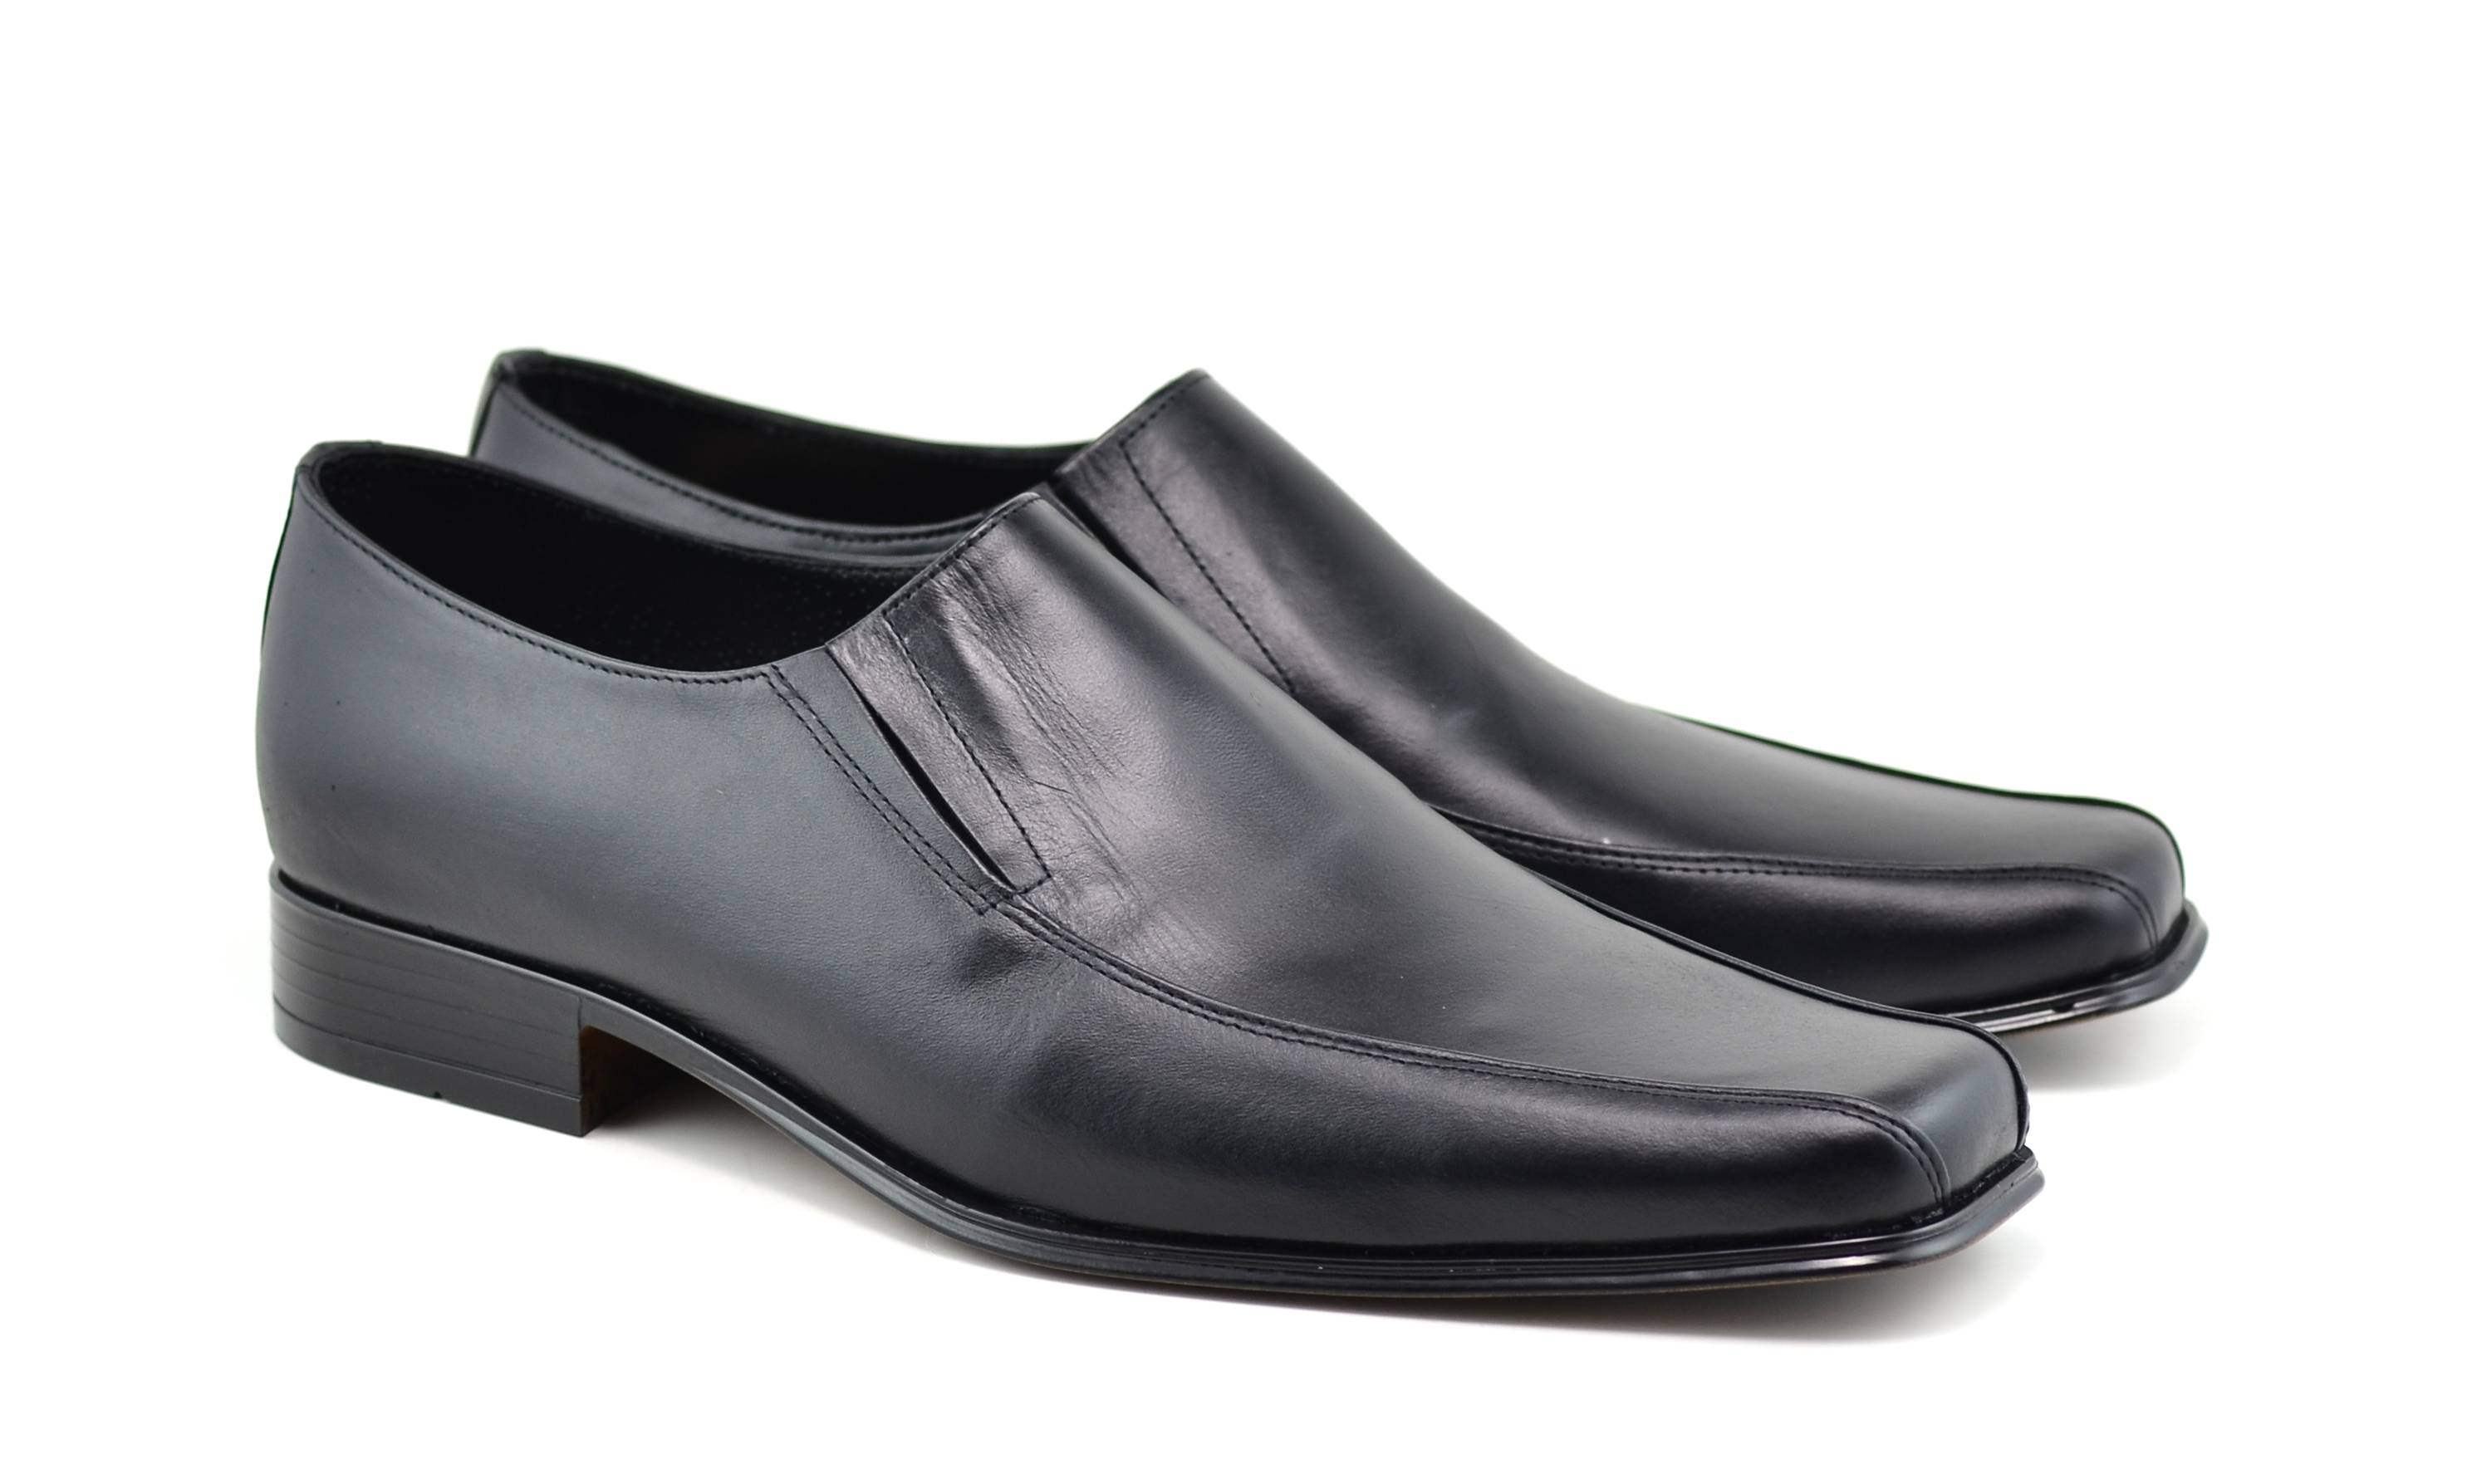 OFERTA MARIMEA 43 - Pantofi barbati eleganti din piele naturala, cu elastic - STD351EL